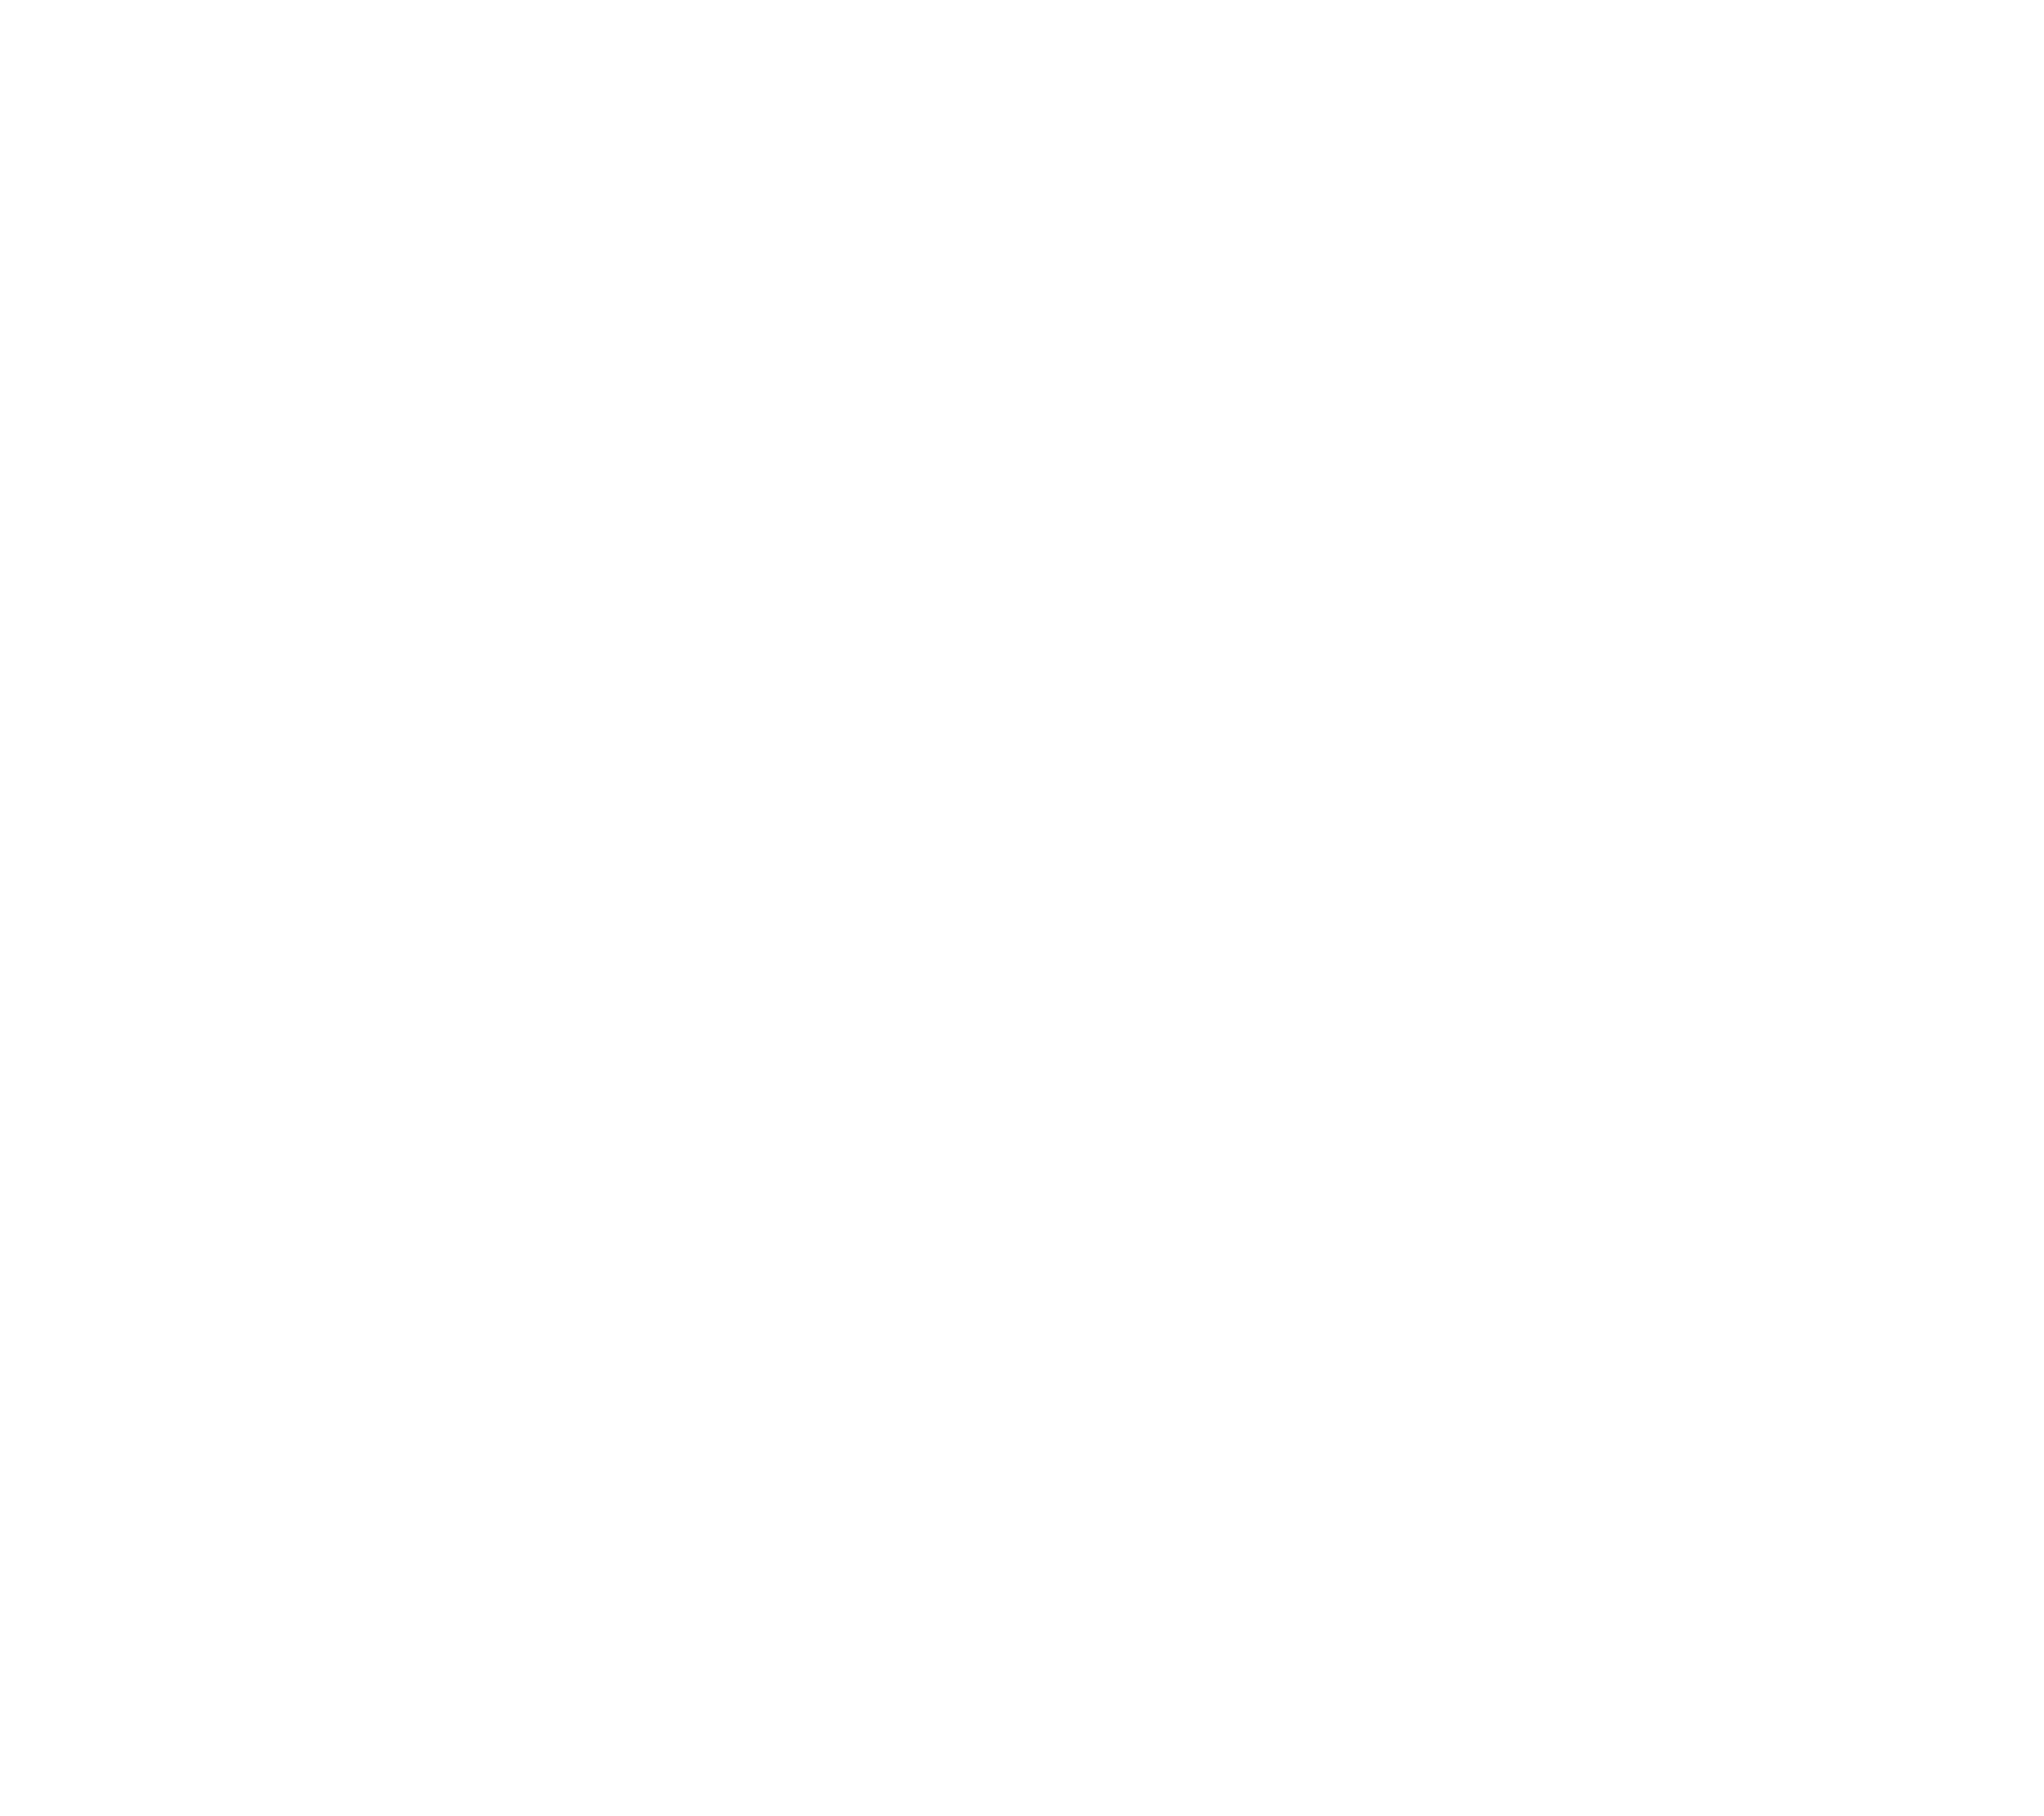 Bucharest Photofest, the 9th edition